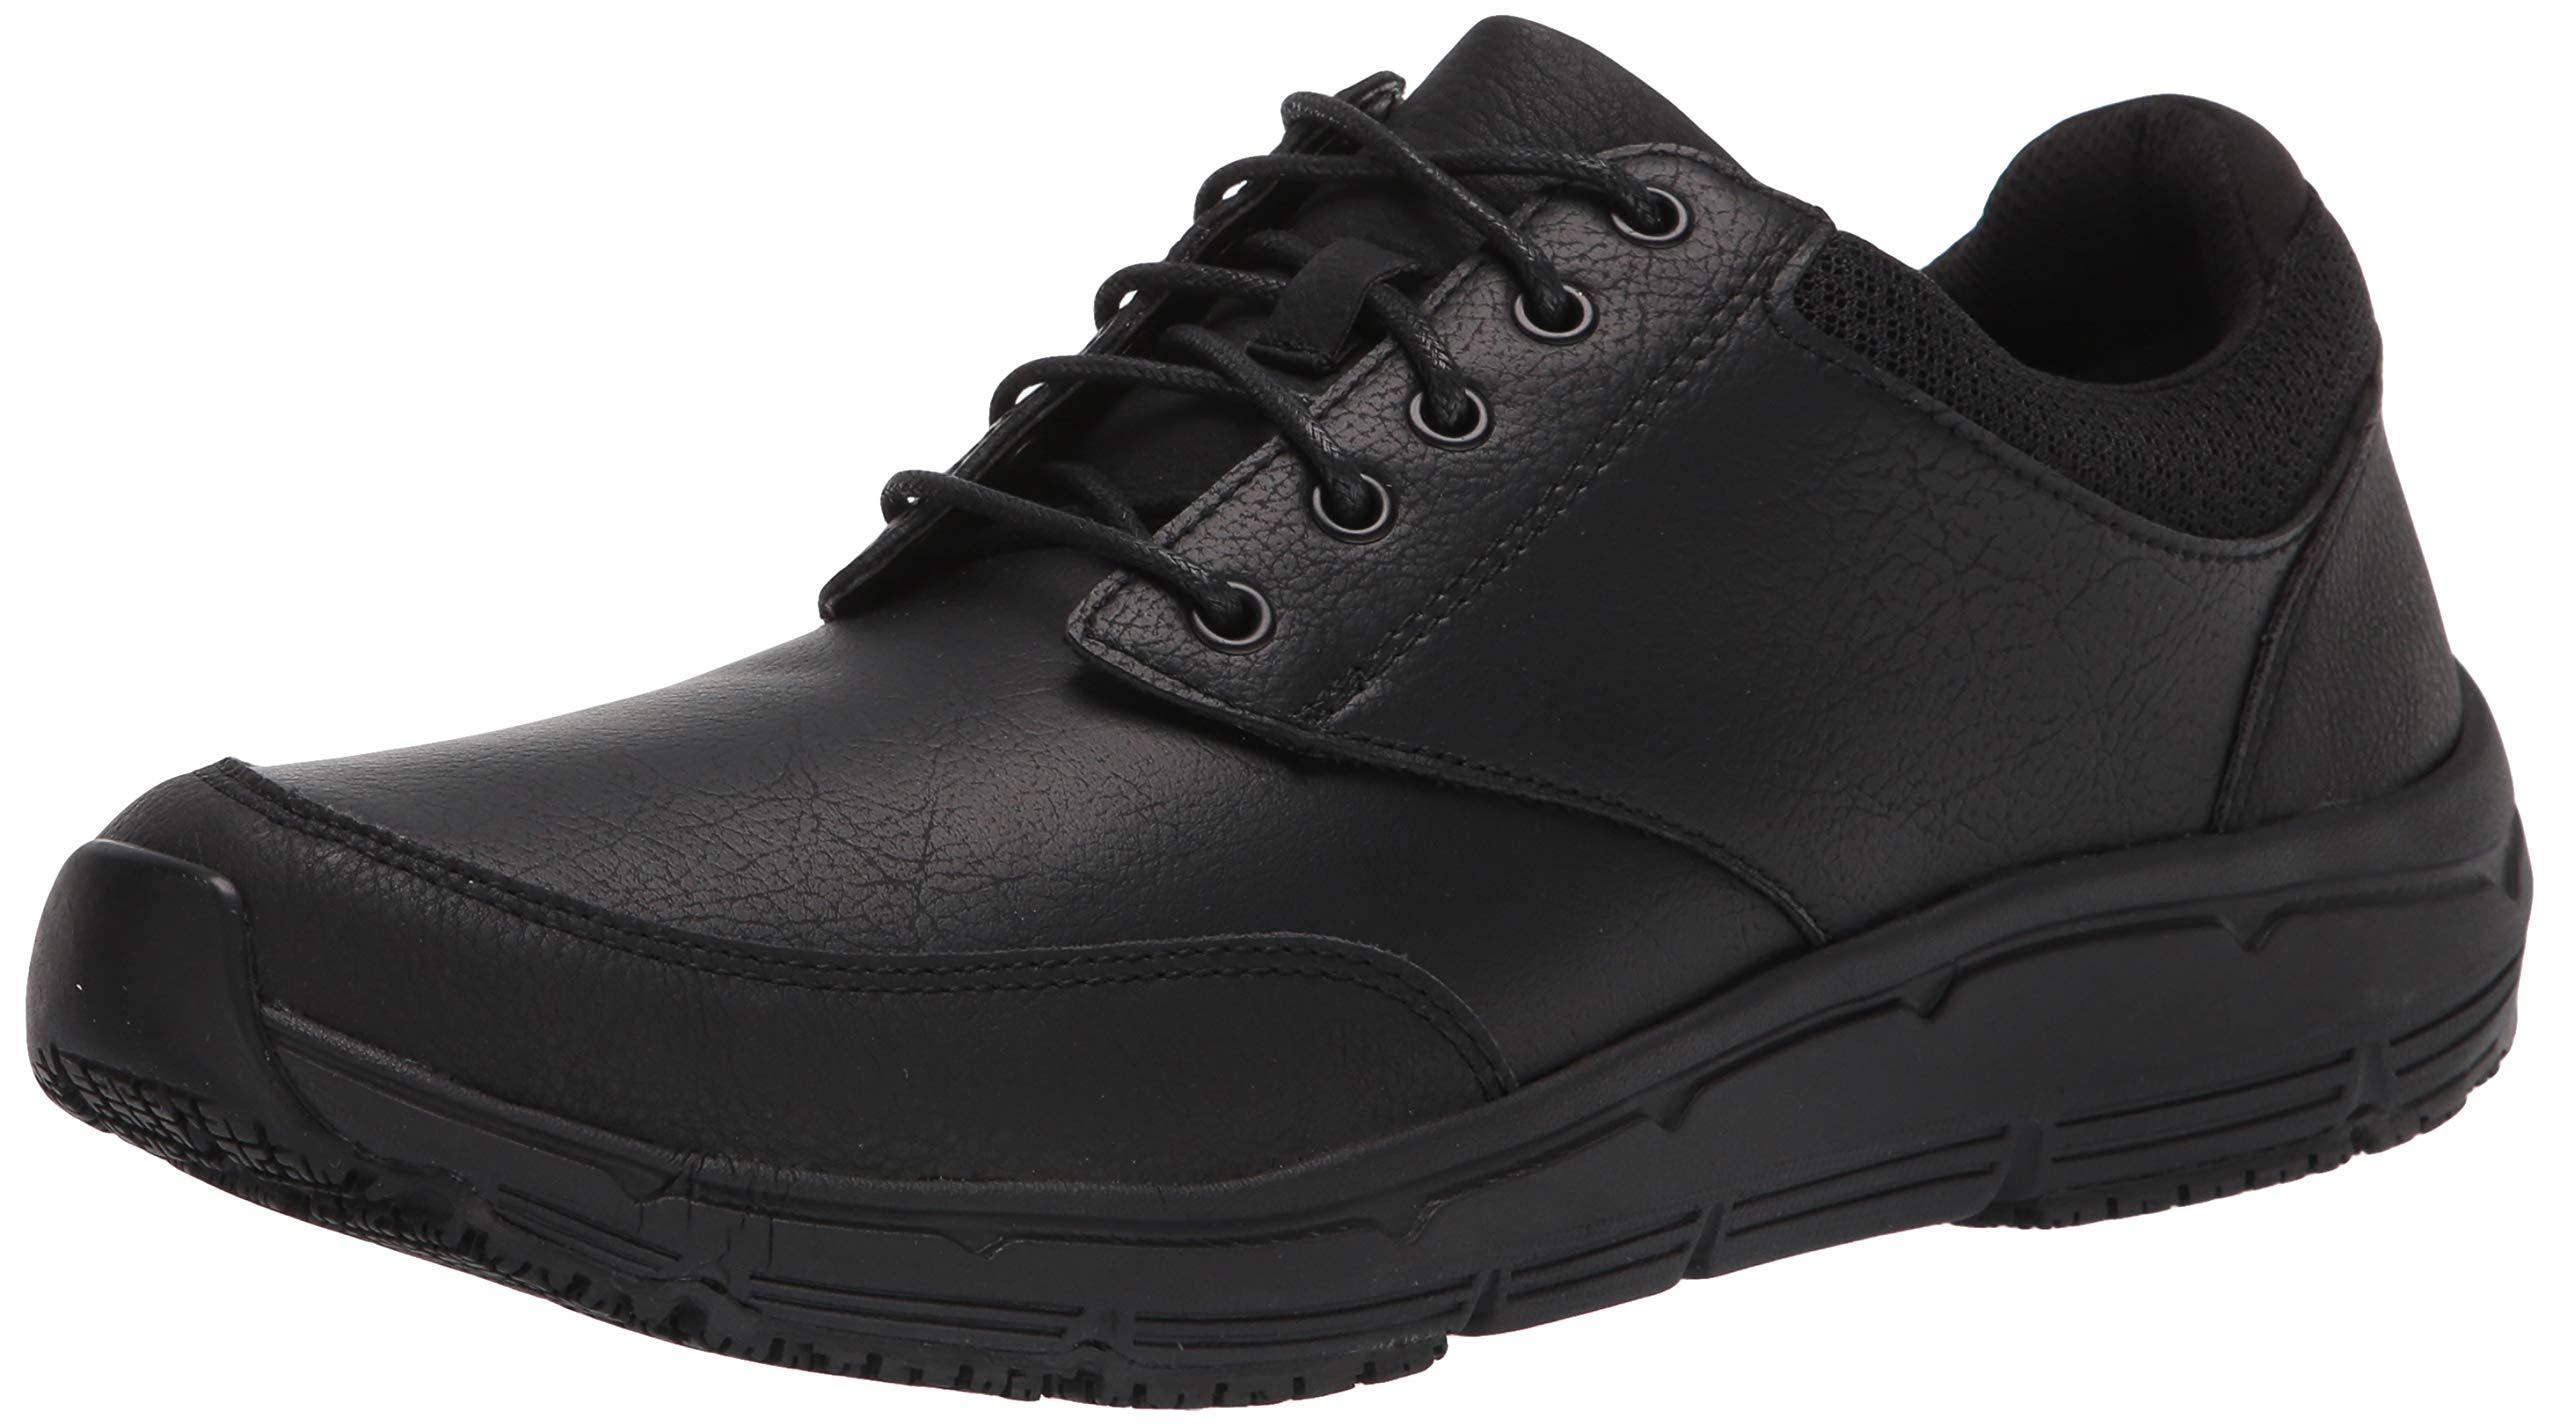 Dr. Scholl's Work Bond Men's Shoes Black : 10.5 M - My Leather Swear